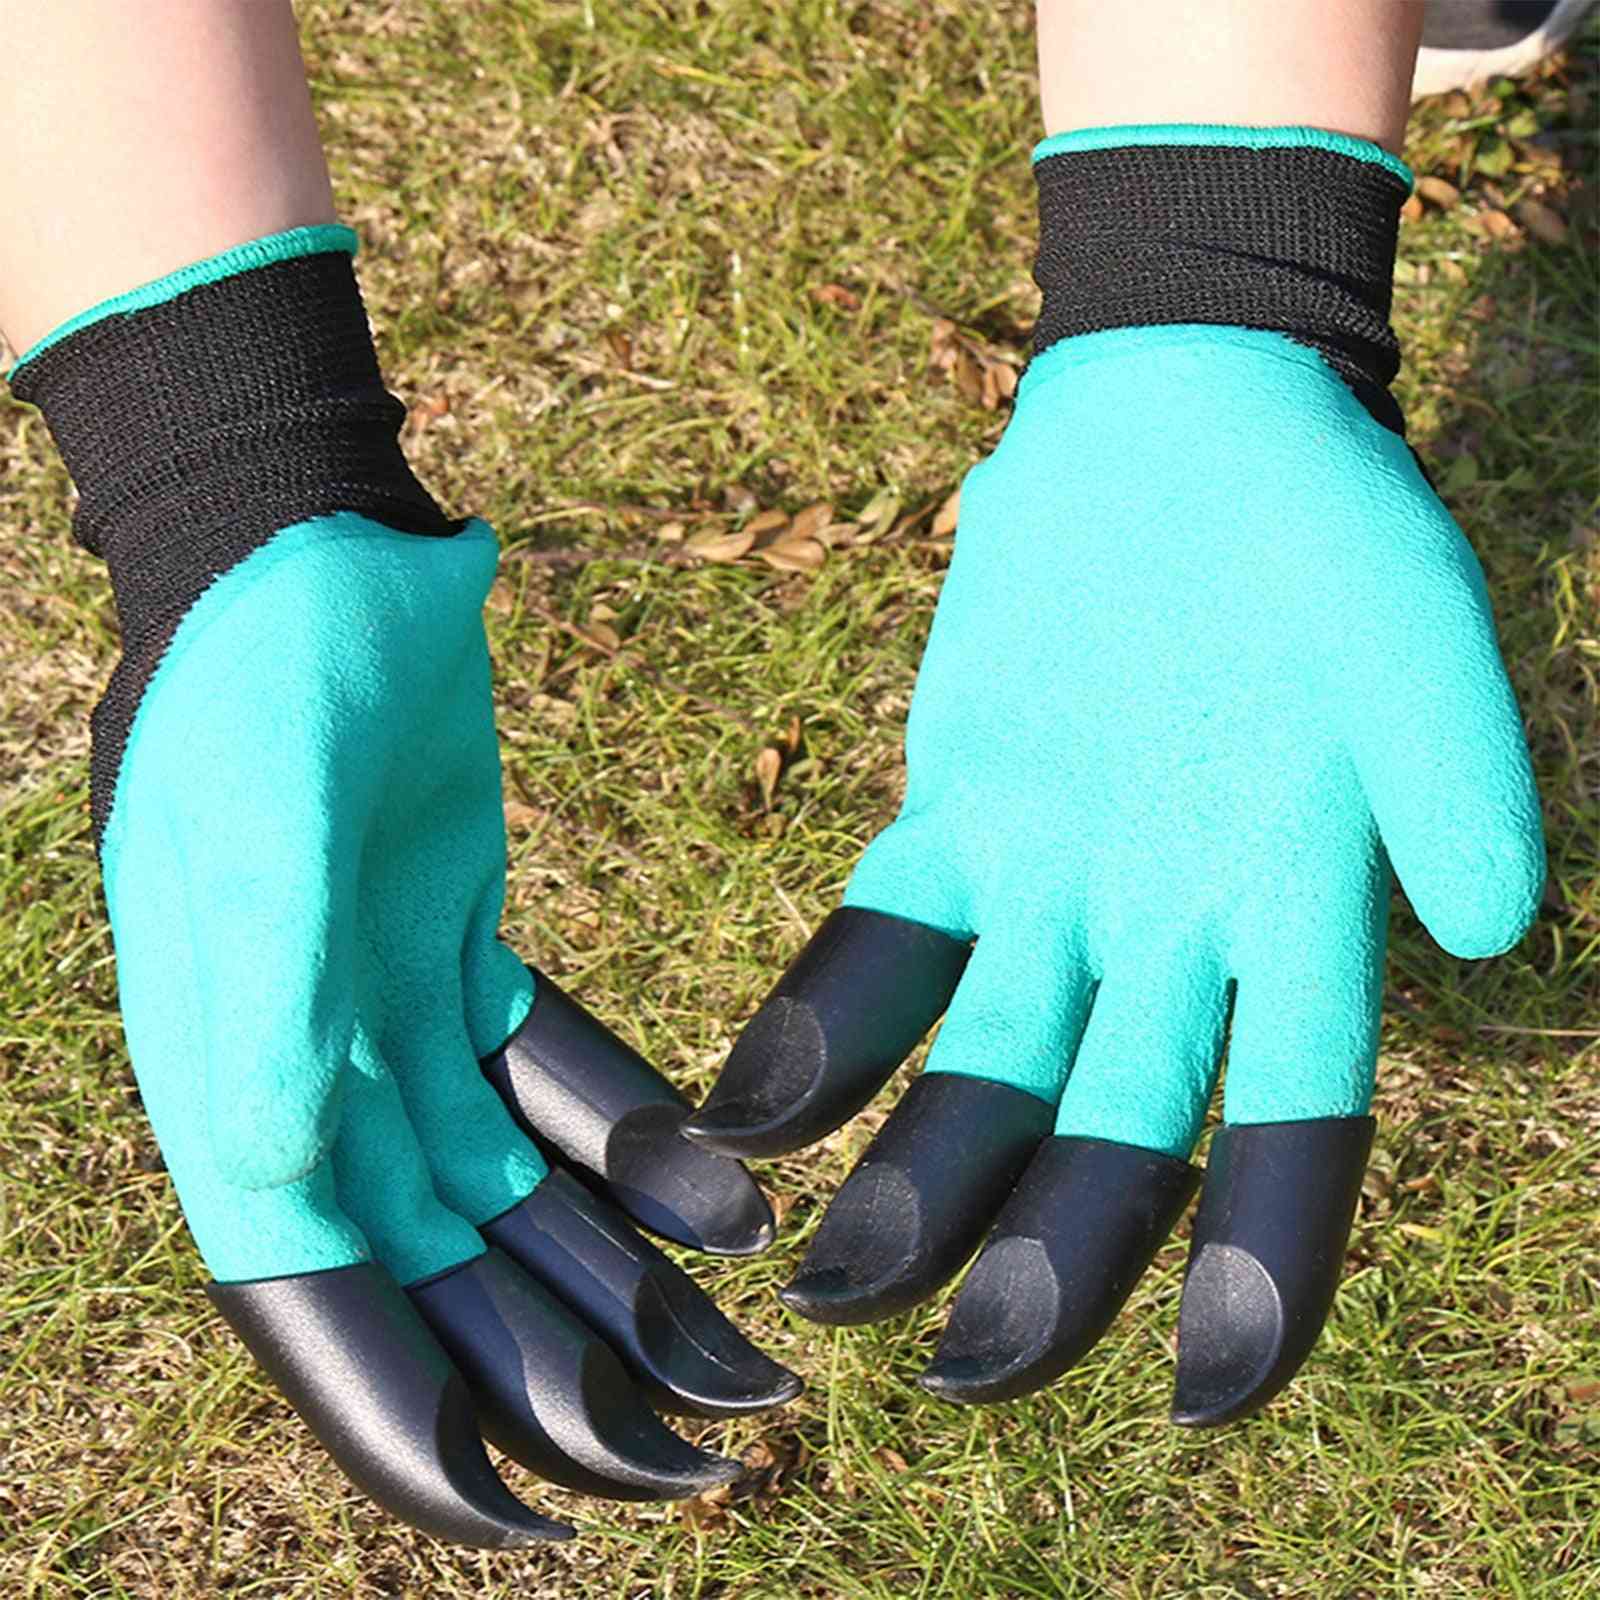 Waterproof Gardening Working Gloves For Planting